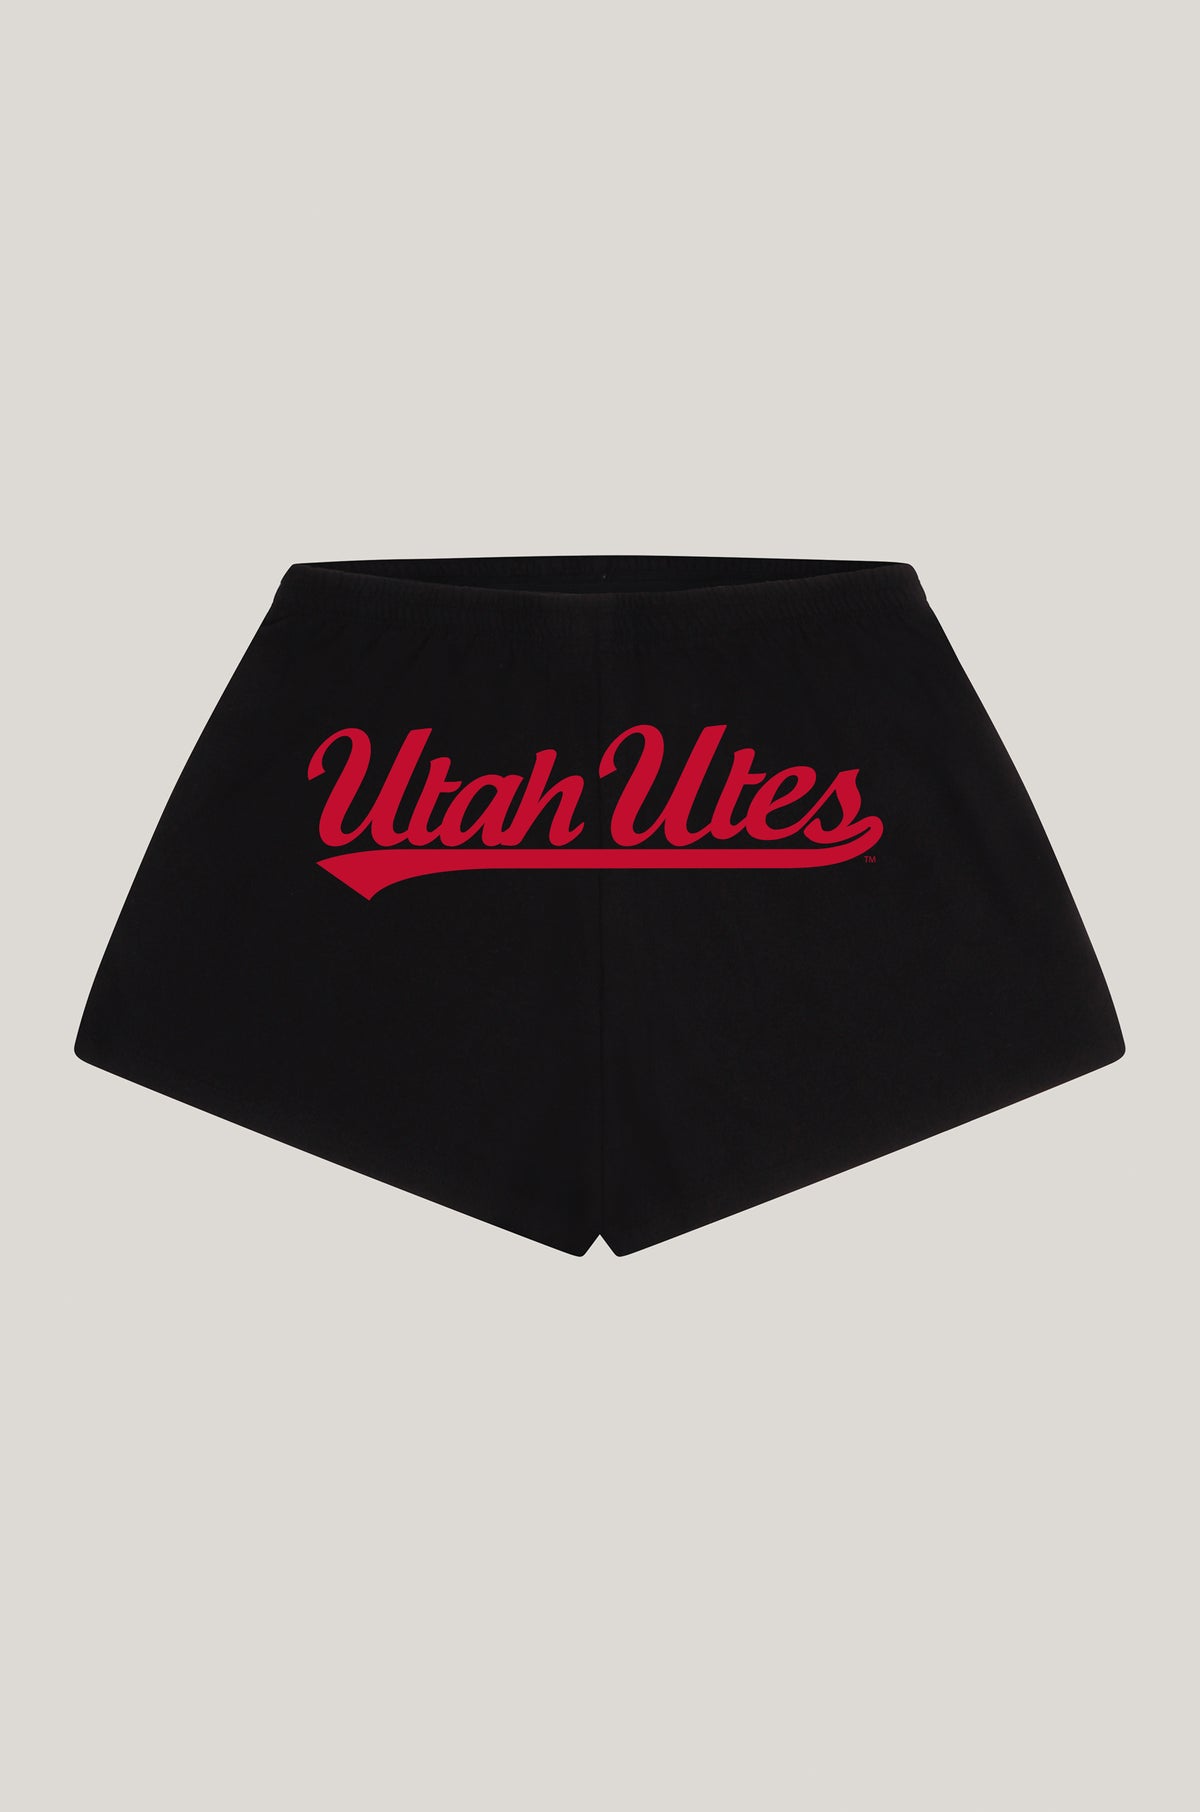 Utah P.E. Shorts